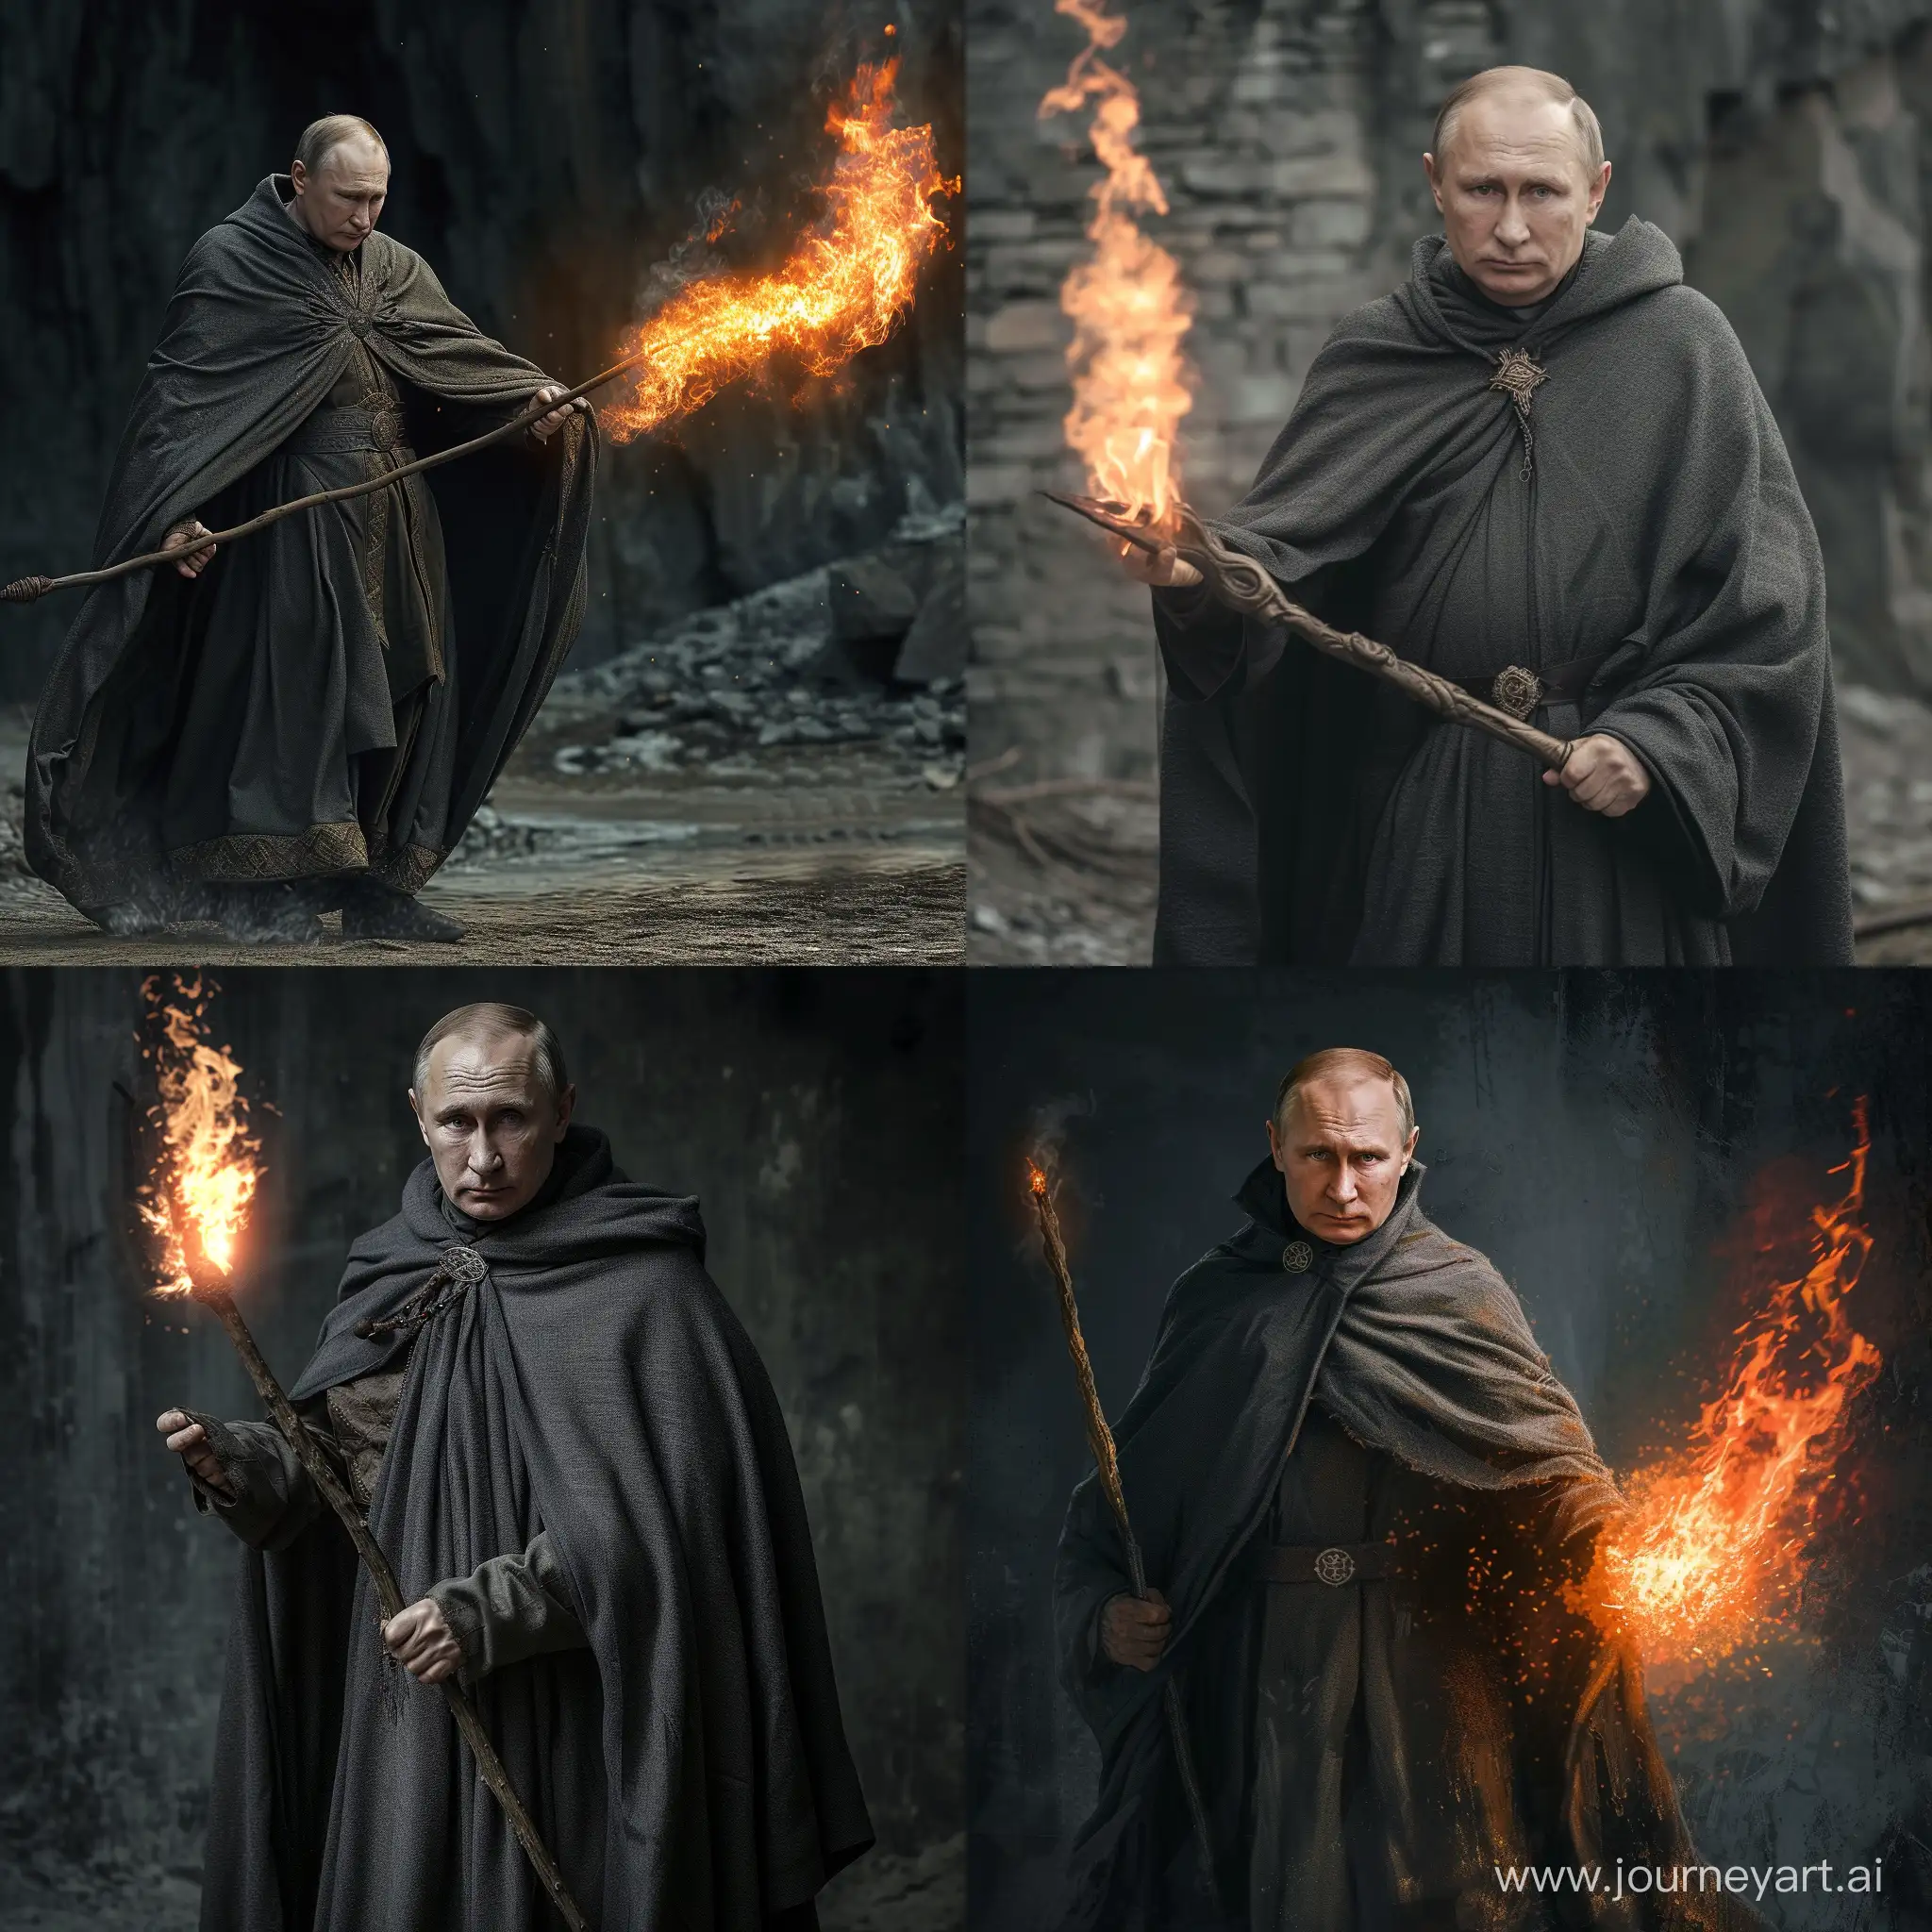 Putin-Summoning-Fiery-Beam-in-Dark-Gray-Cloak-with-Staff